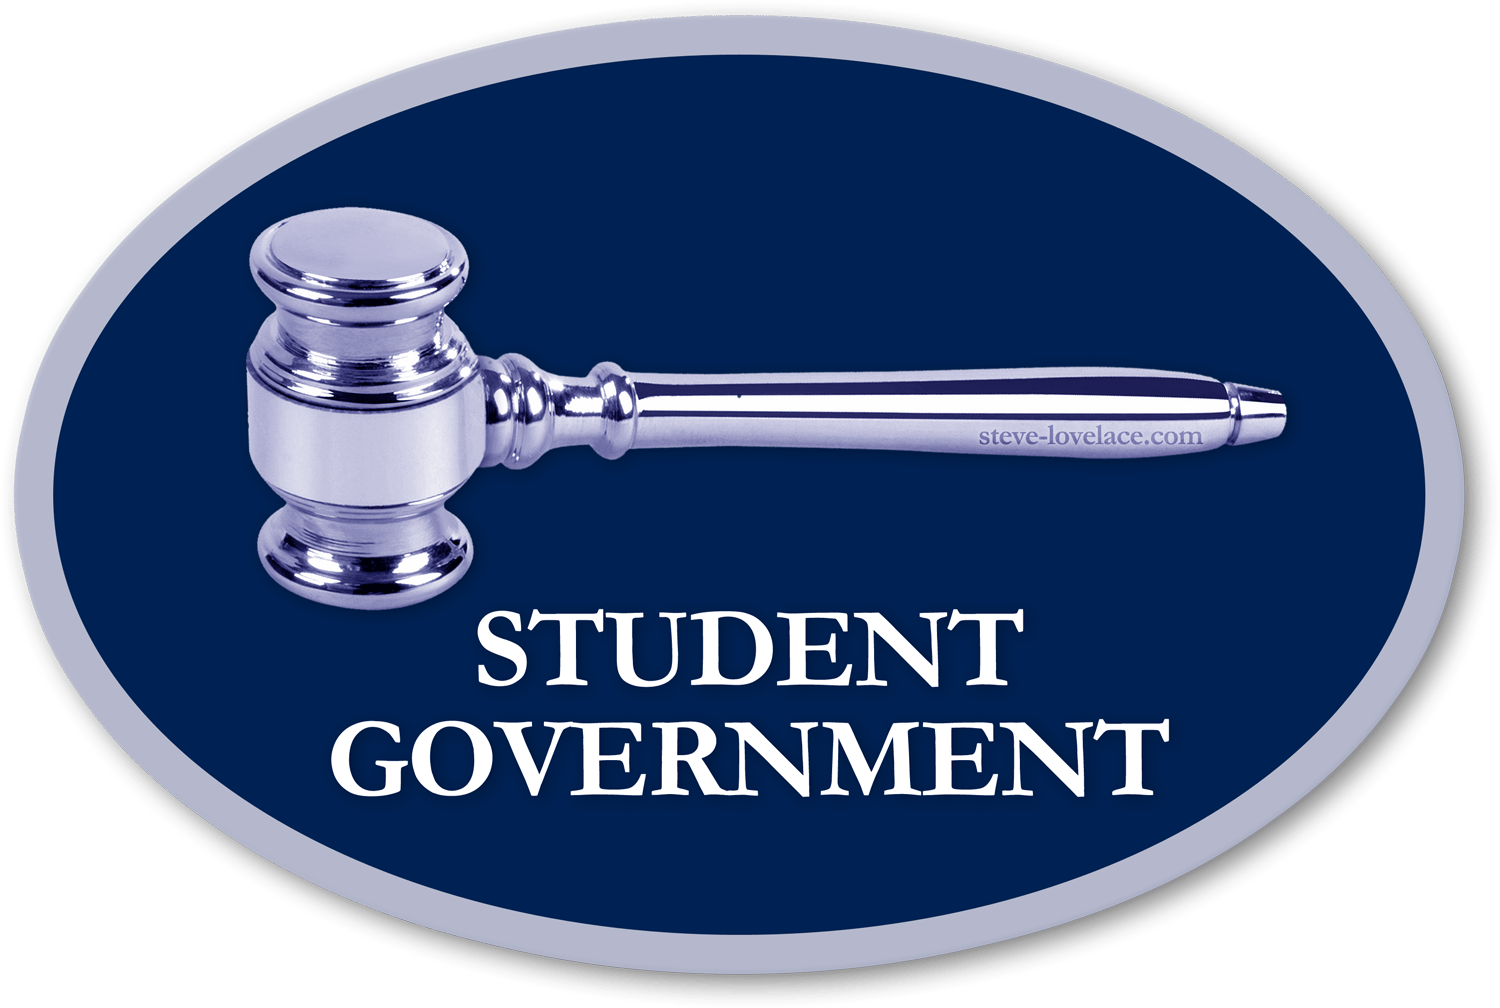 Student government logo